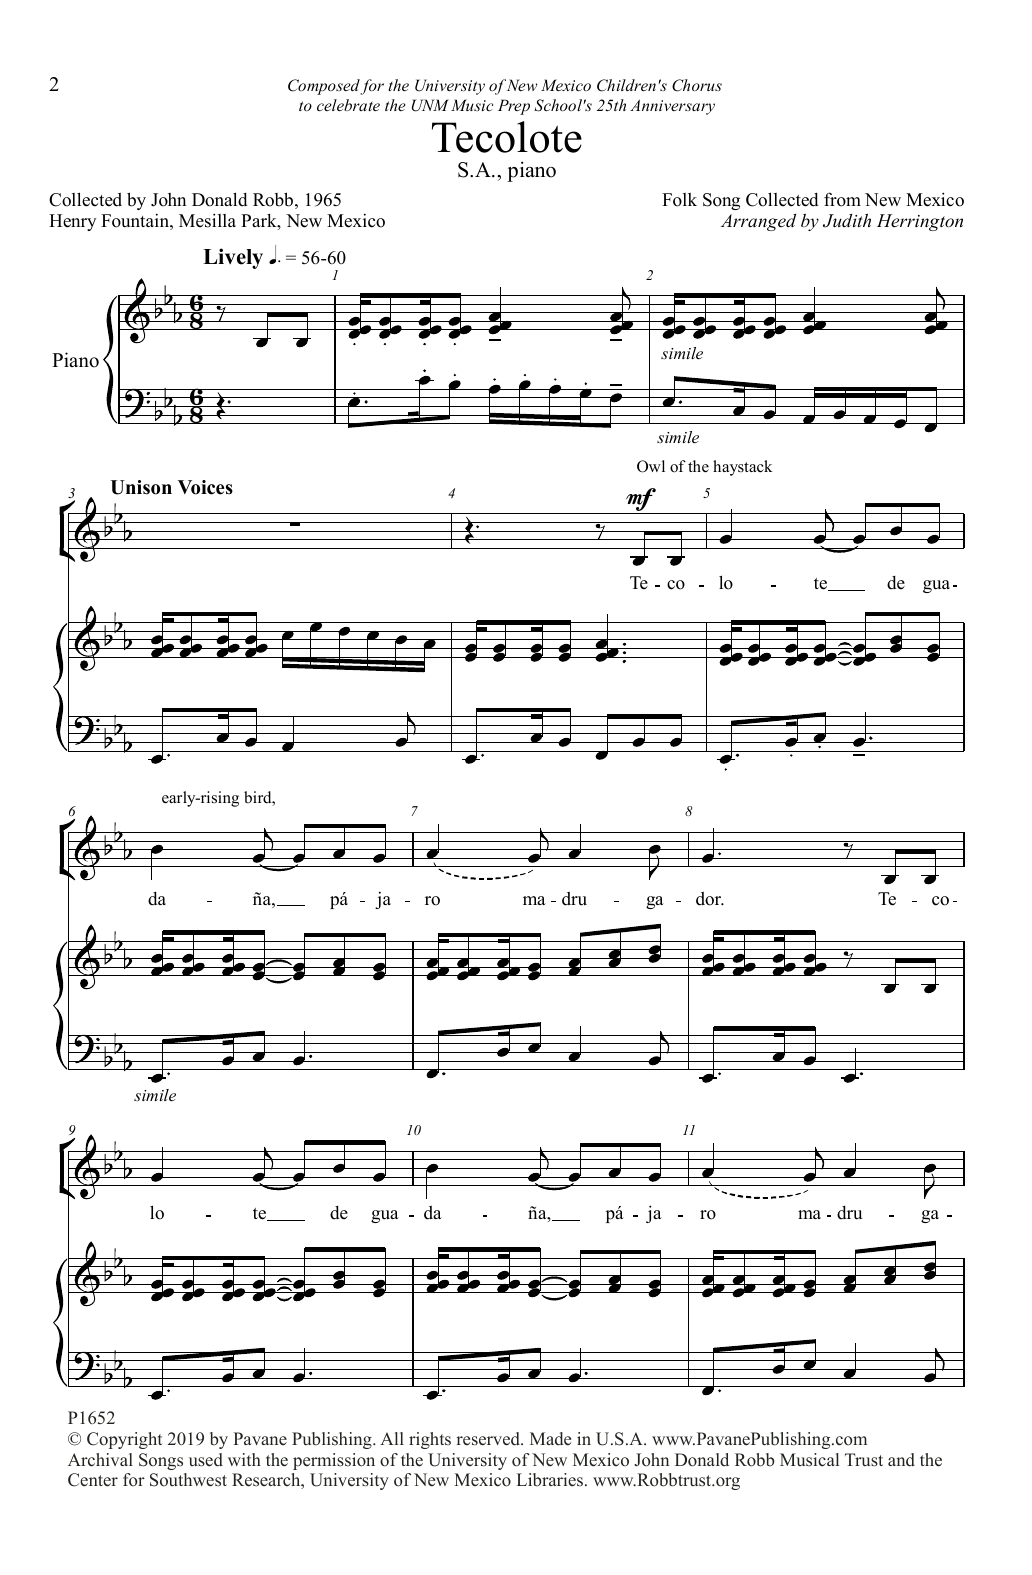 Folk Song Tecolote (arr. Judith Herrington) Sheet Music Notes & Chords for Choir - Download or Print PDF